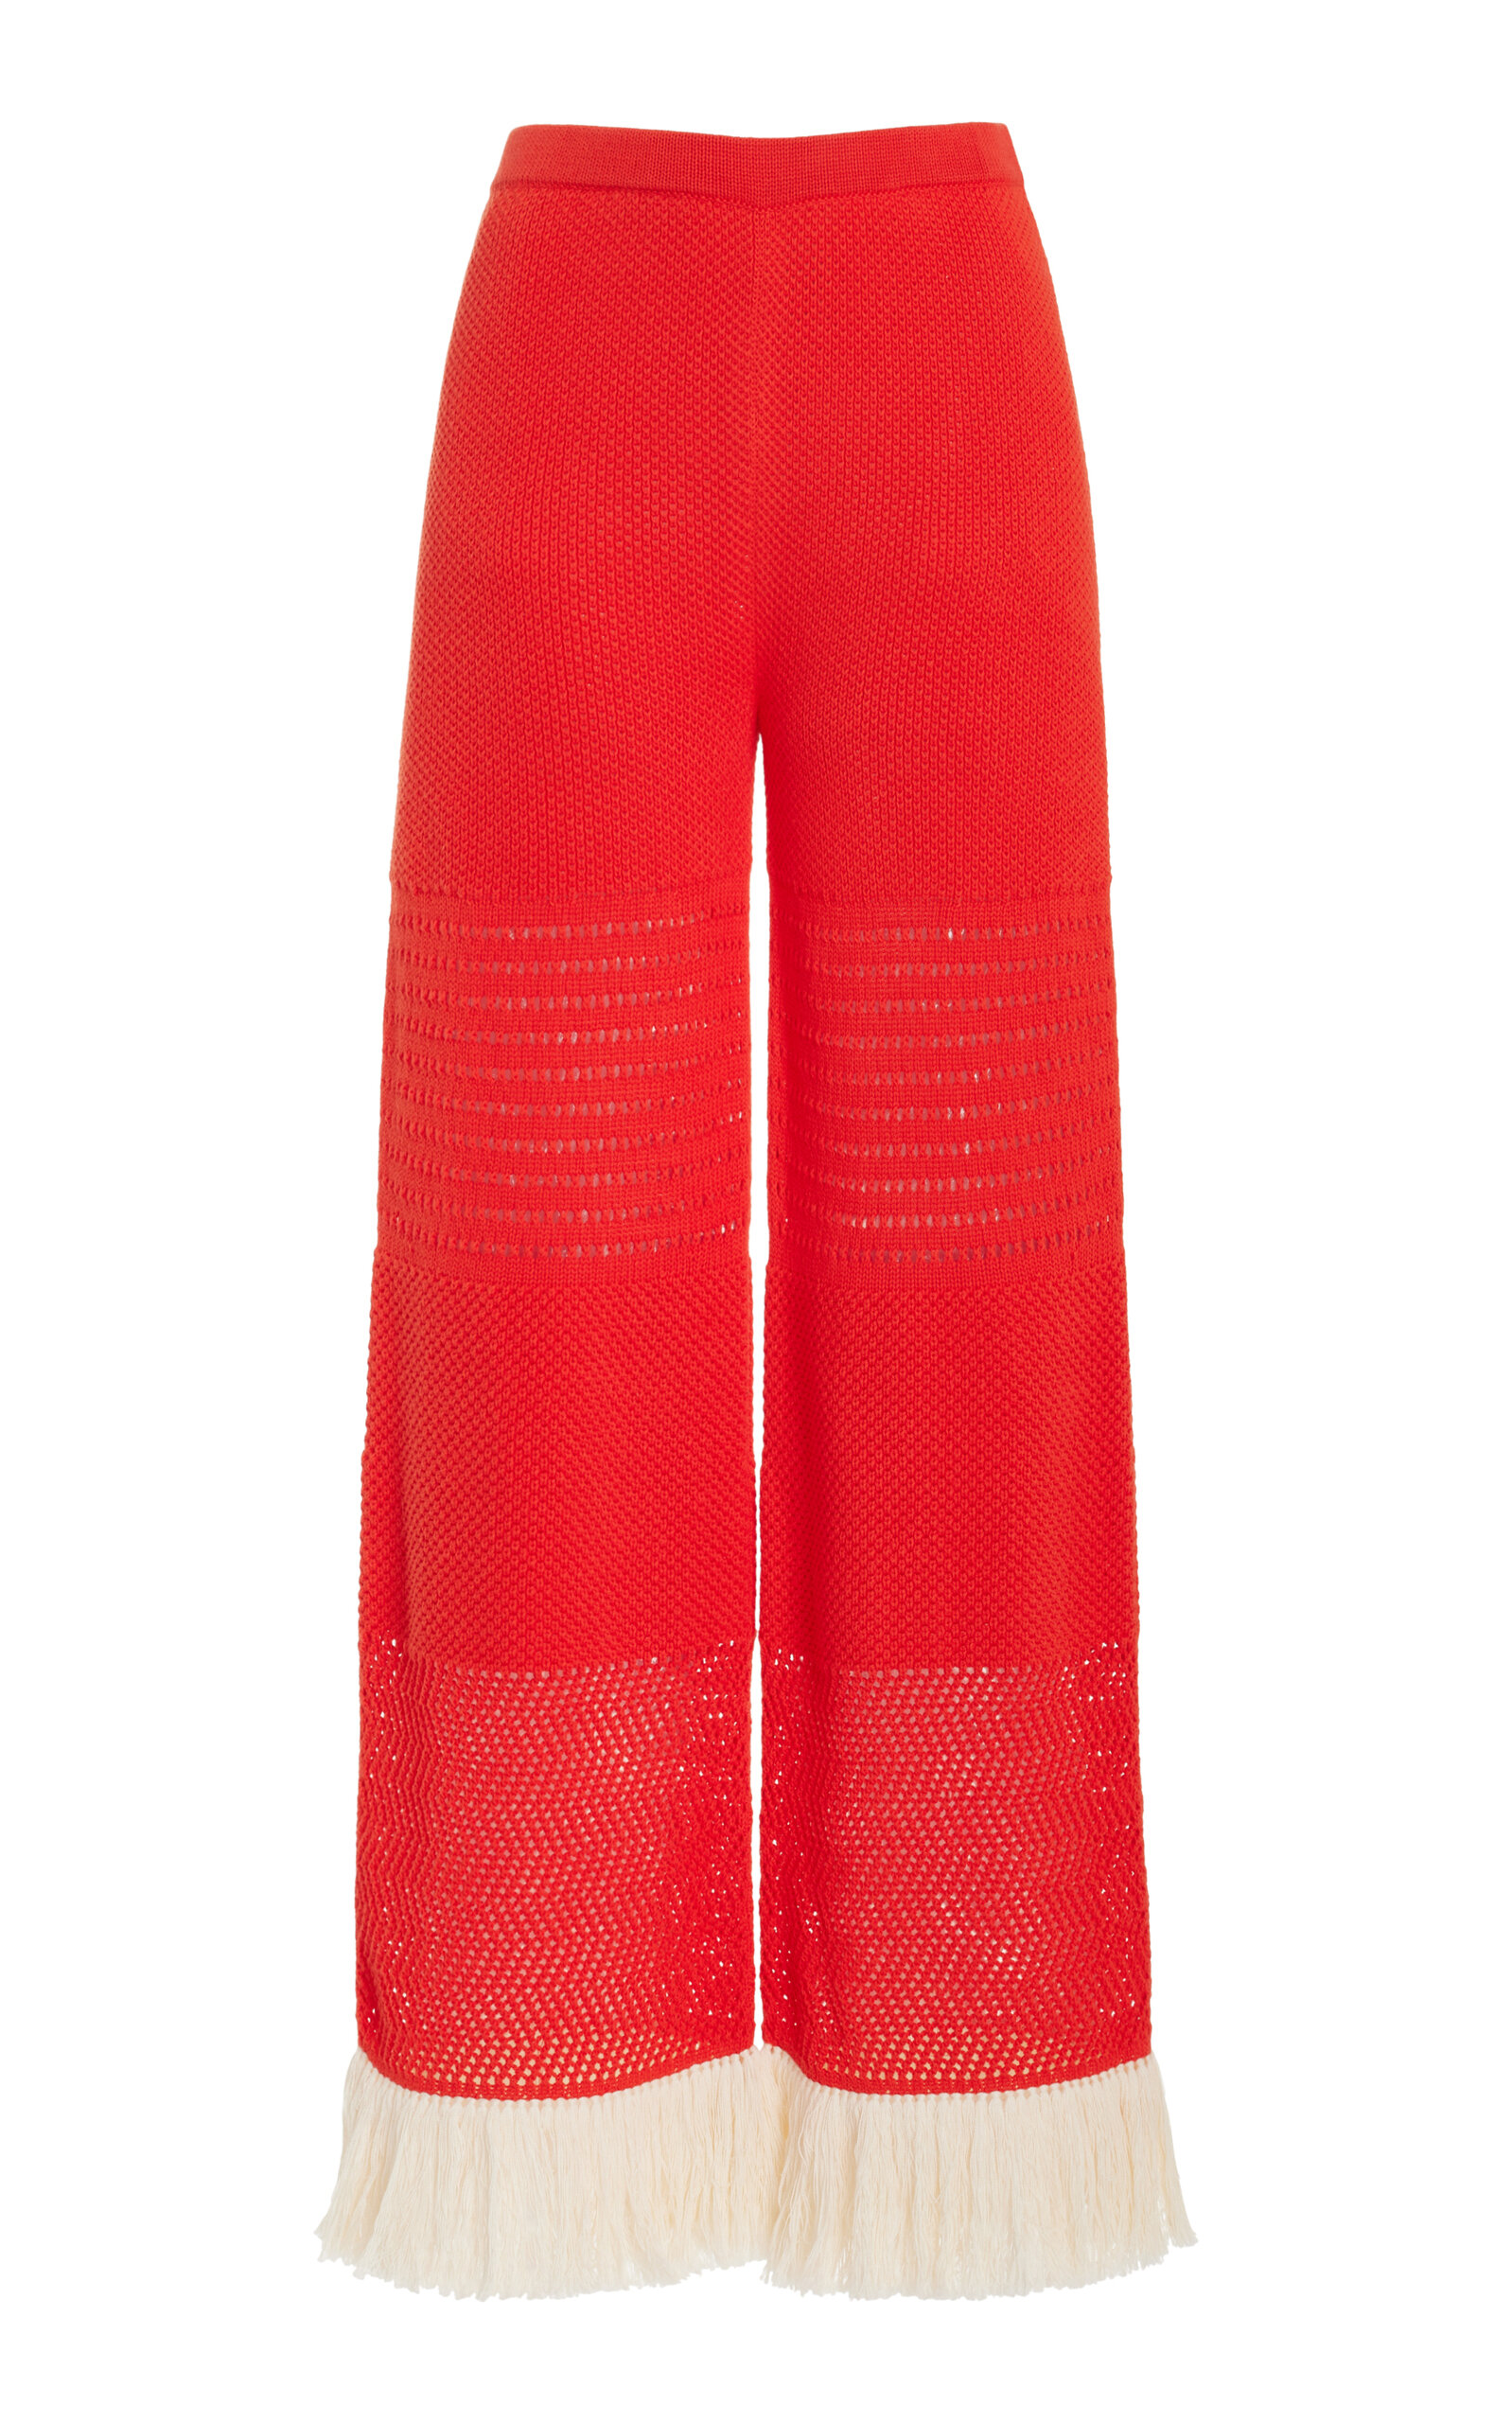 Carisa Fringe-Detailed Knit Cotton Wide-Leg Pants